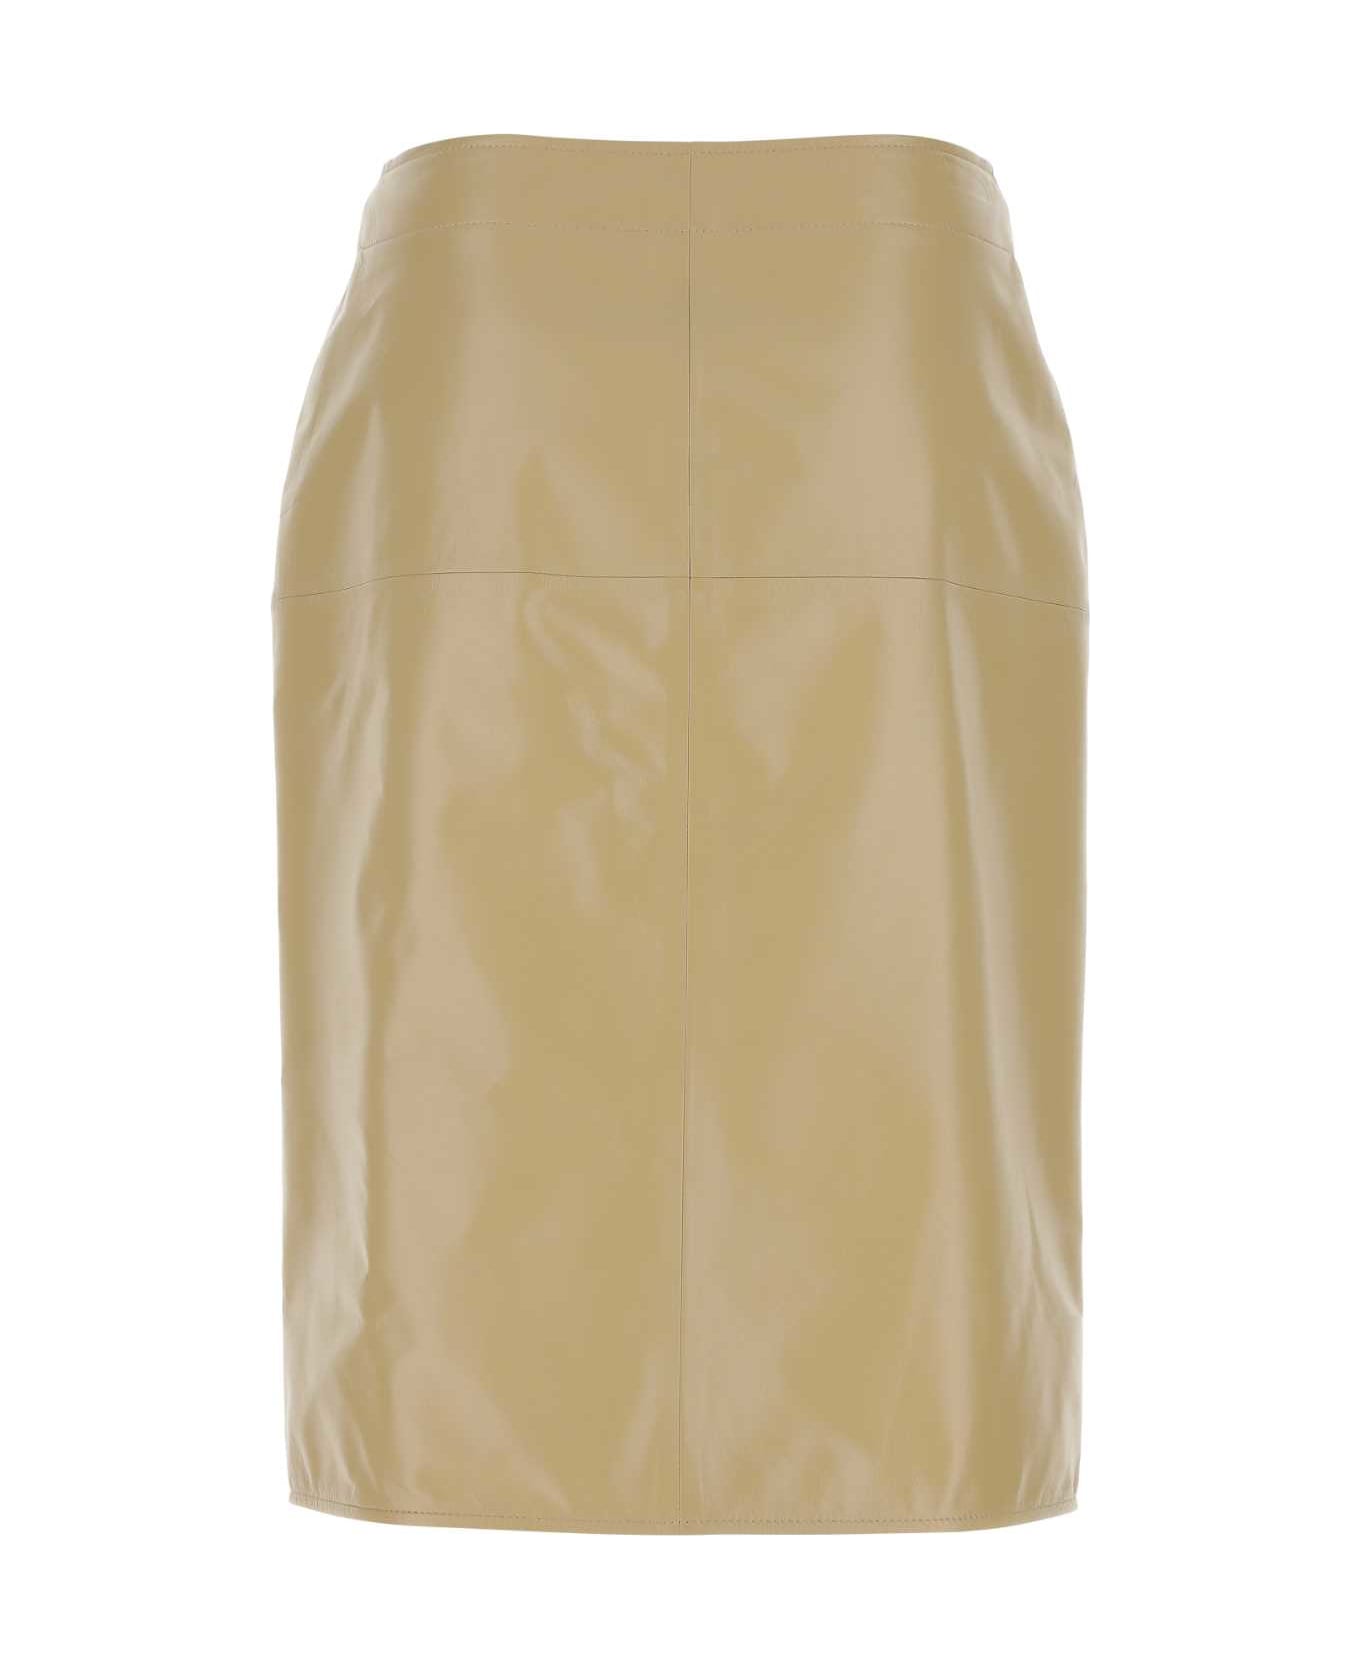 Bottega Veneta Beige Leather Skirt - 9640 スカート